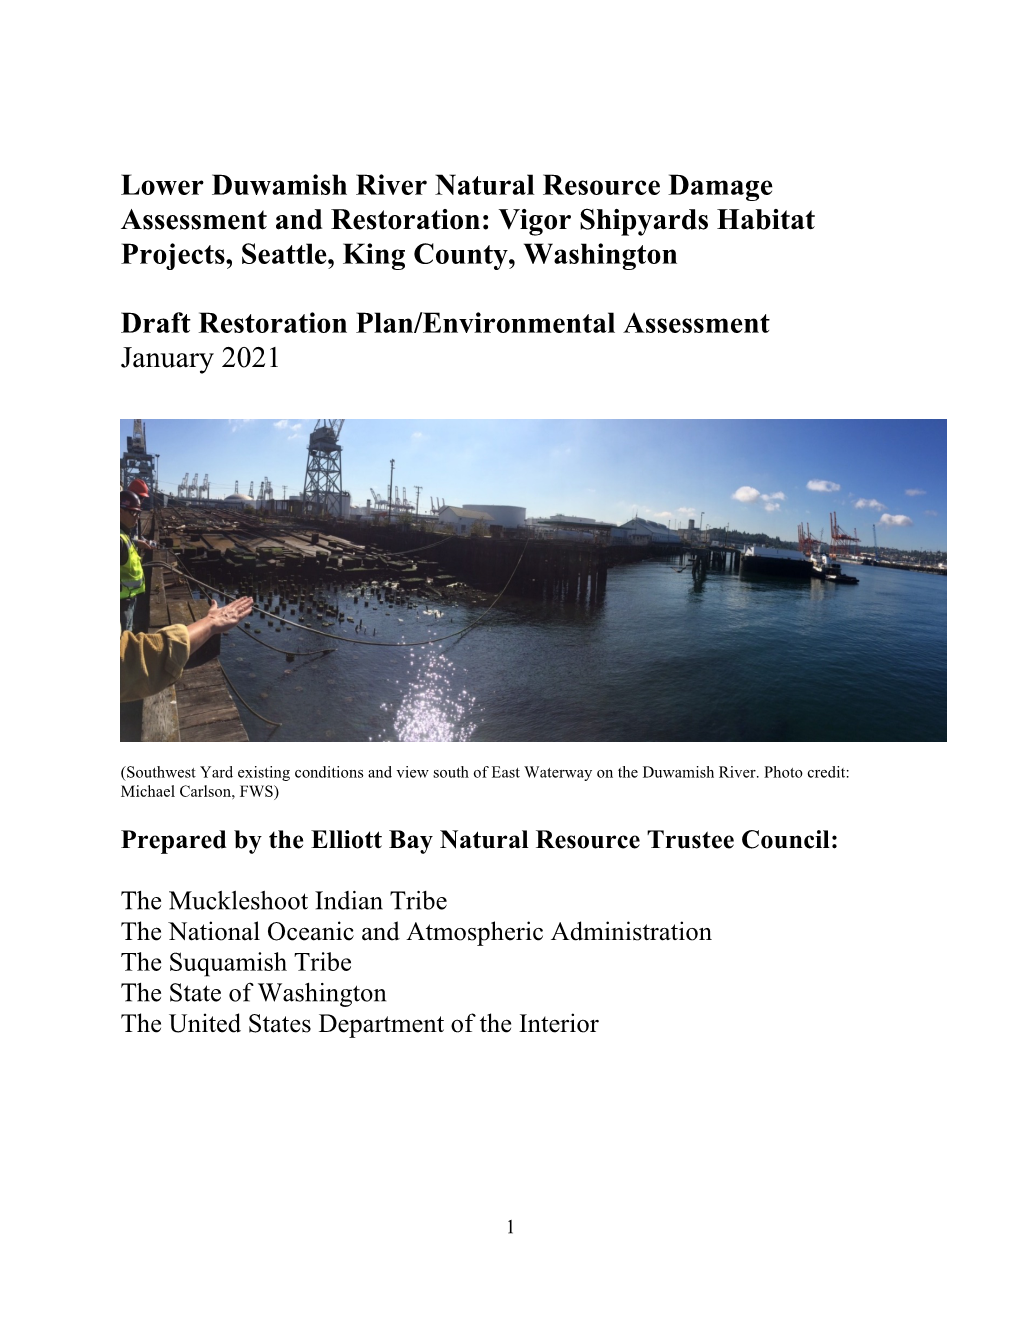 Lower Duwamish River Natural Resource Damage Assessment and Restoration: Vigor Shipyards Habitat Projects, Seattle, King County, Washington